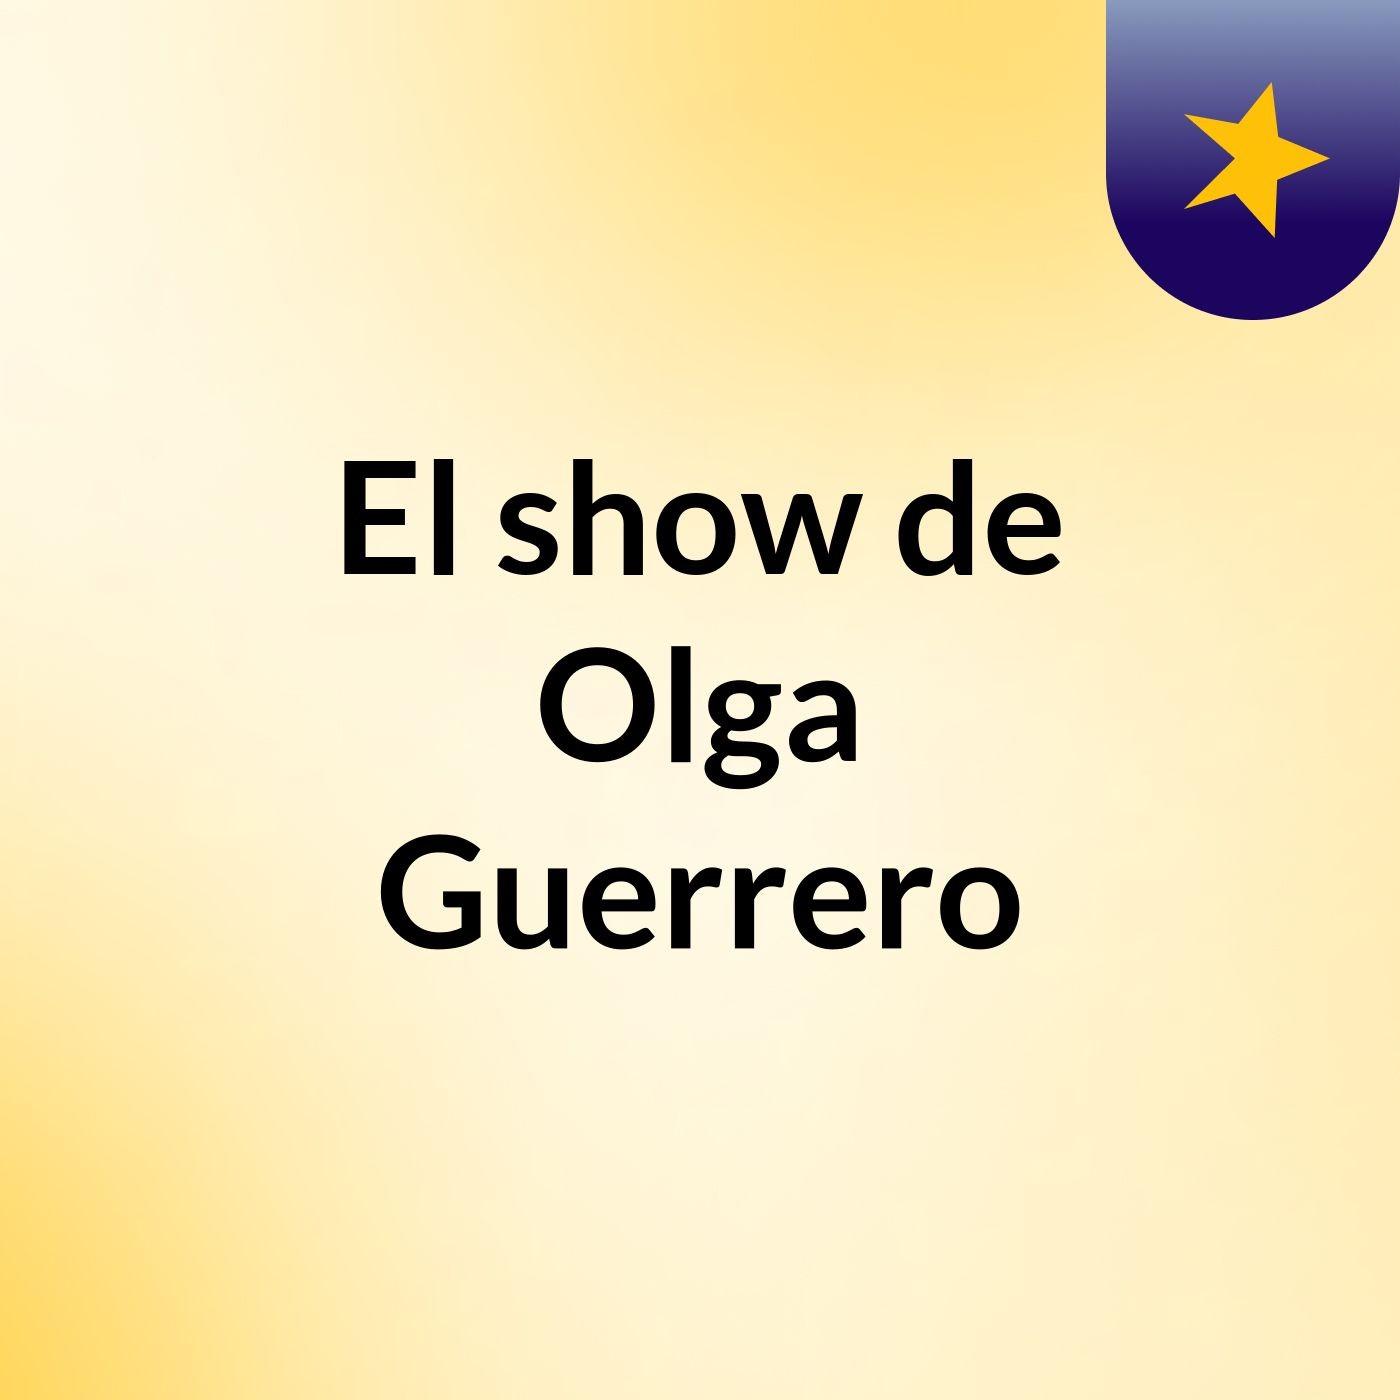 Olga Guerrero/ Merengue